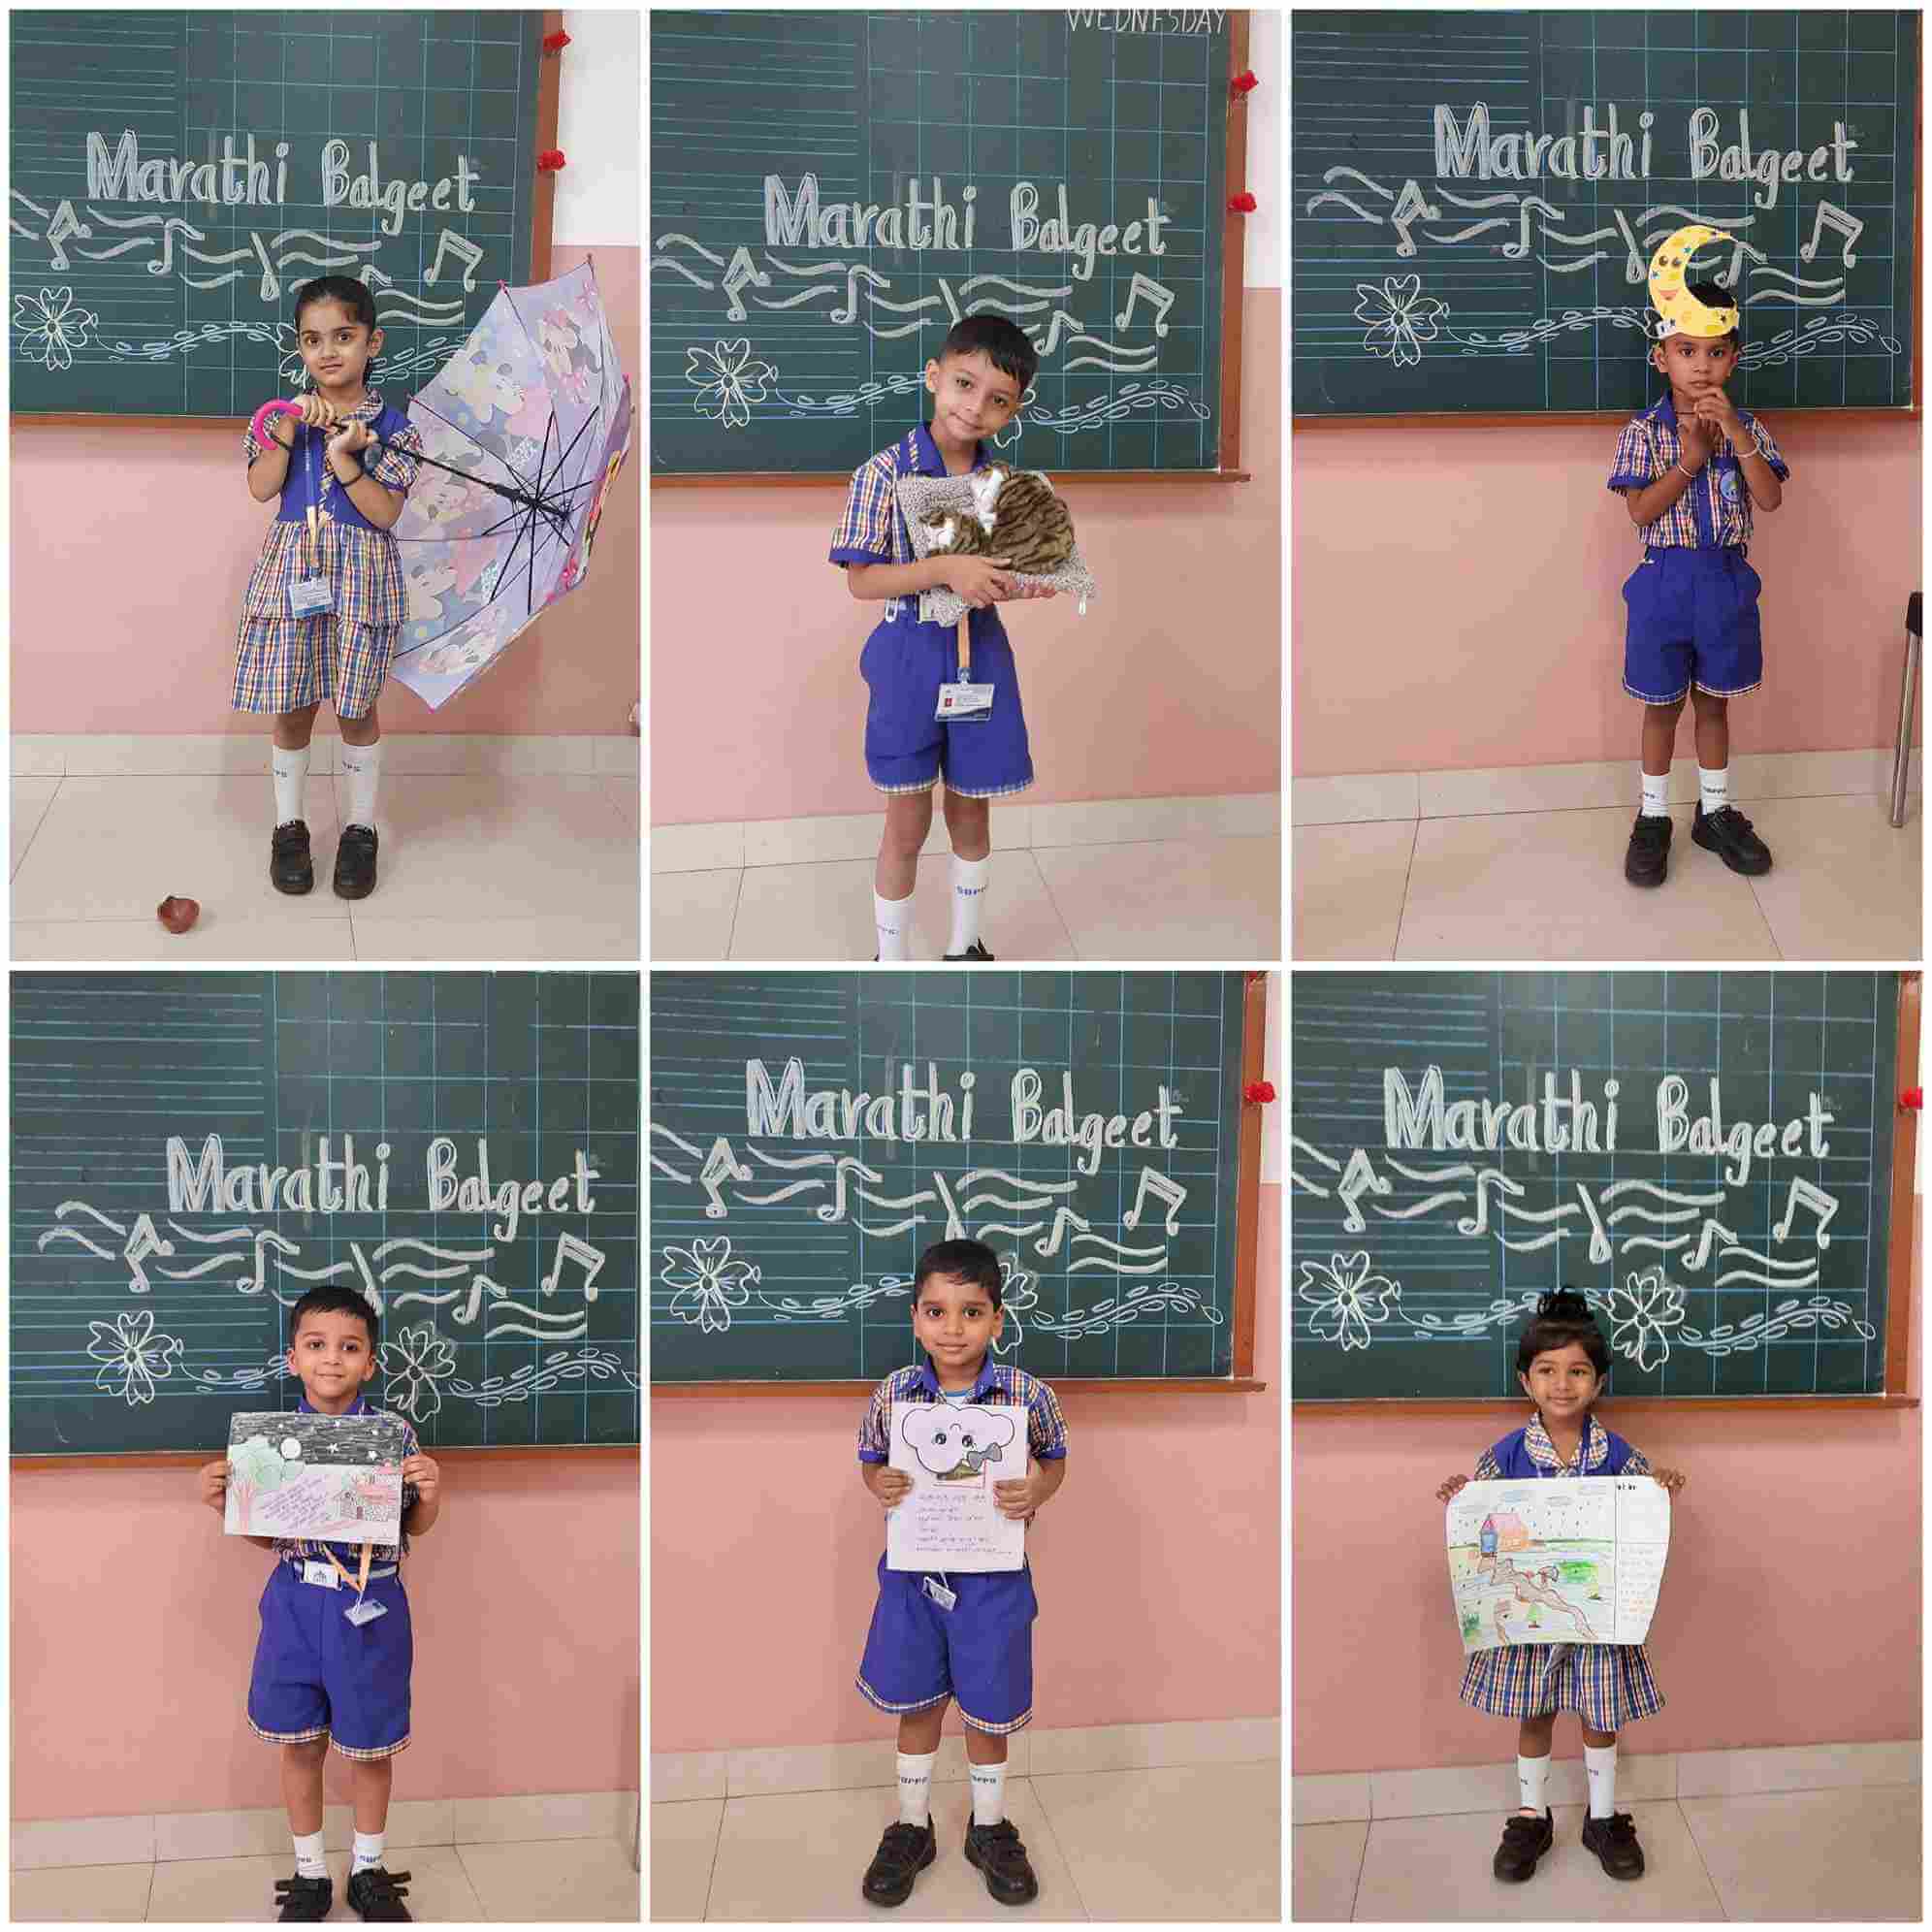 Marathi Balgeet Activity - Nursery & Junior KG, SBPPS